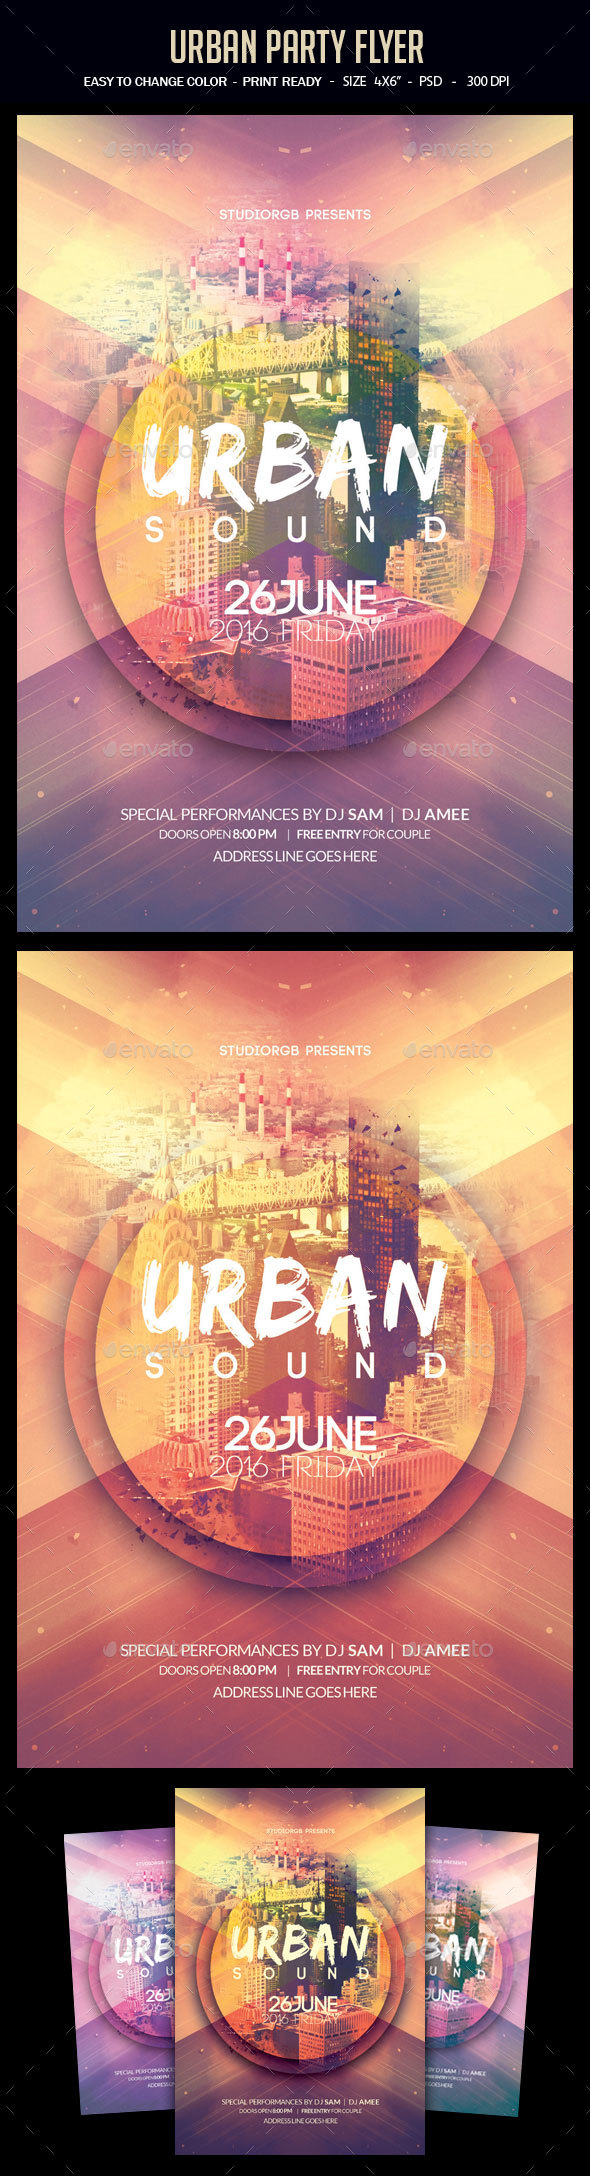 Urban Party Flyer